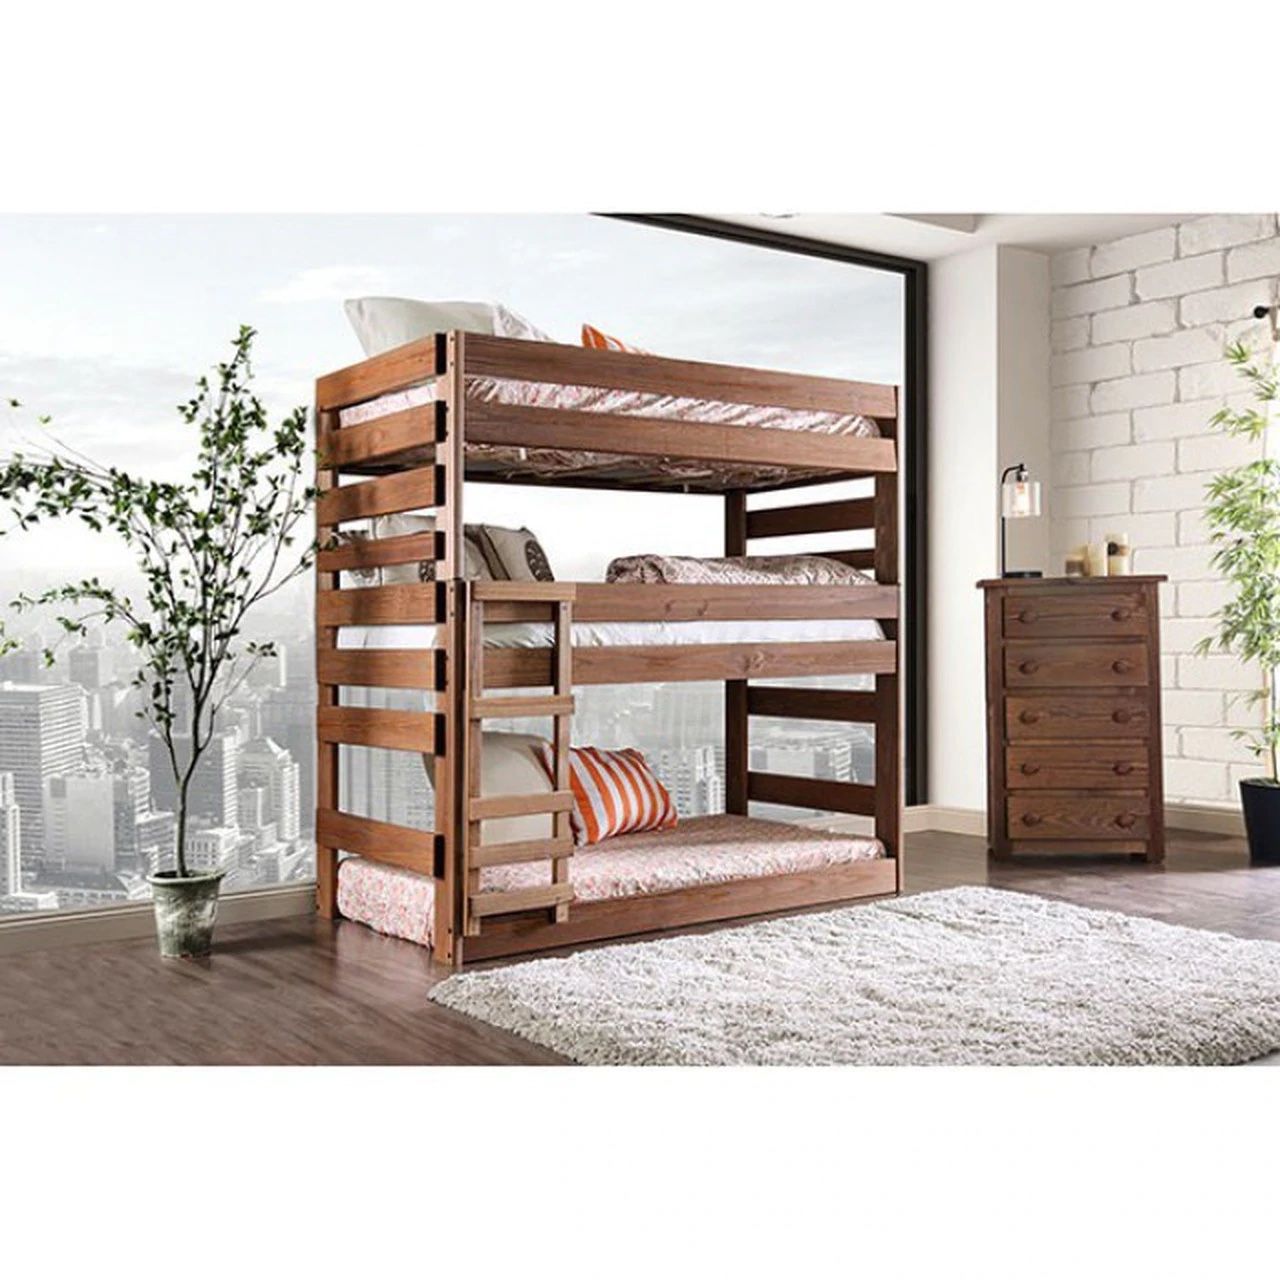 Luxury triple wood bunk bed brand new